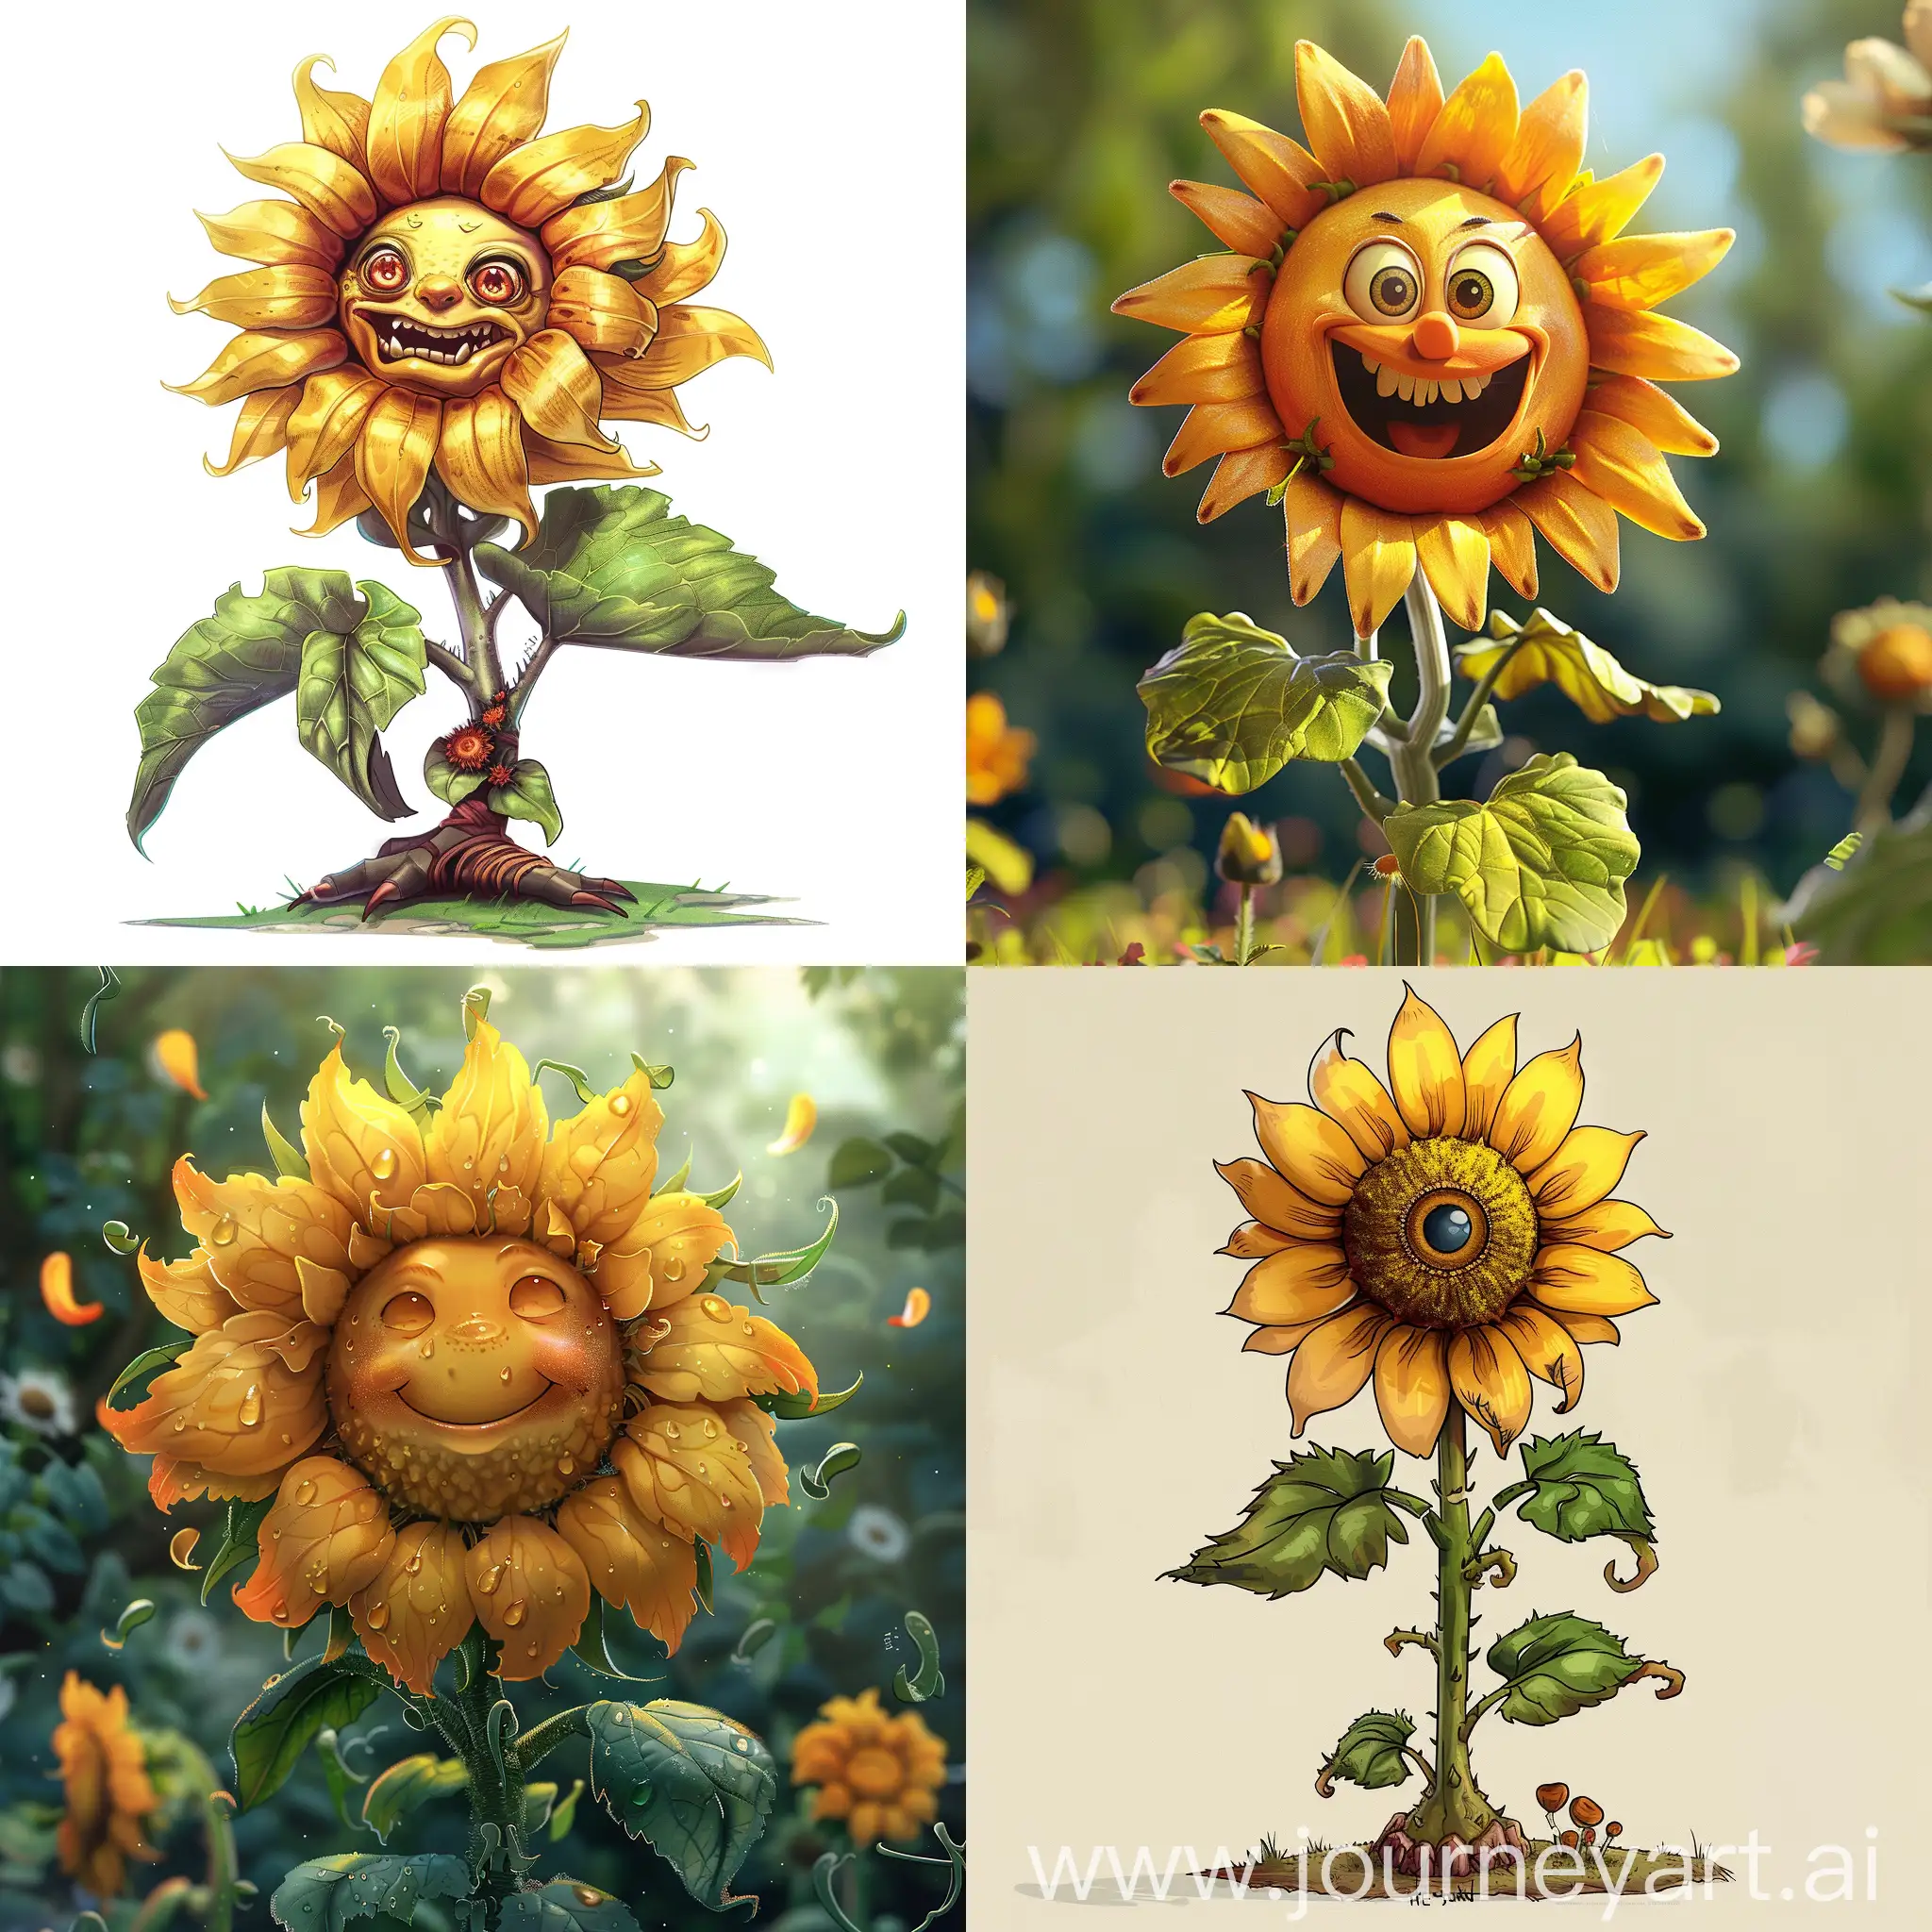 Vibrant-Sunflower-Character-in-a-Serene-Setting